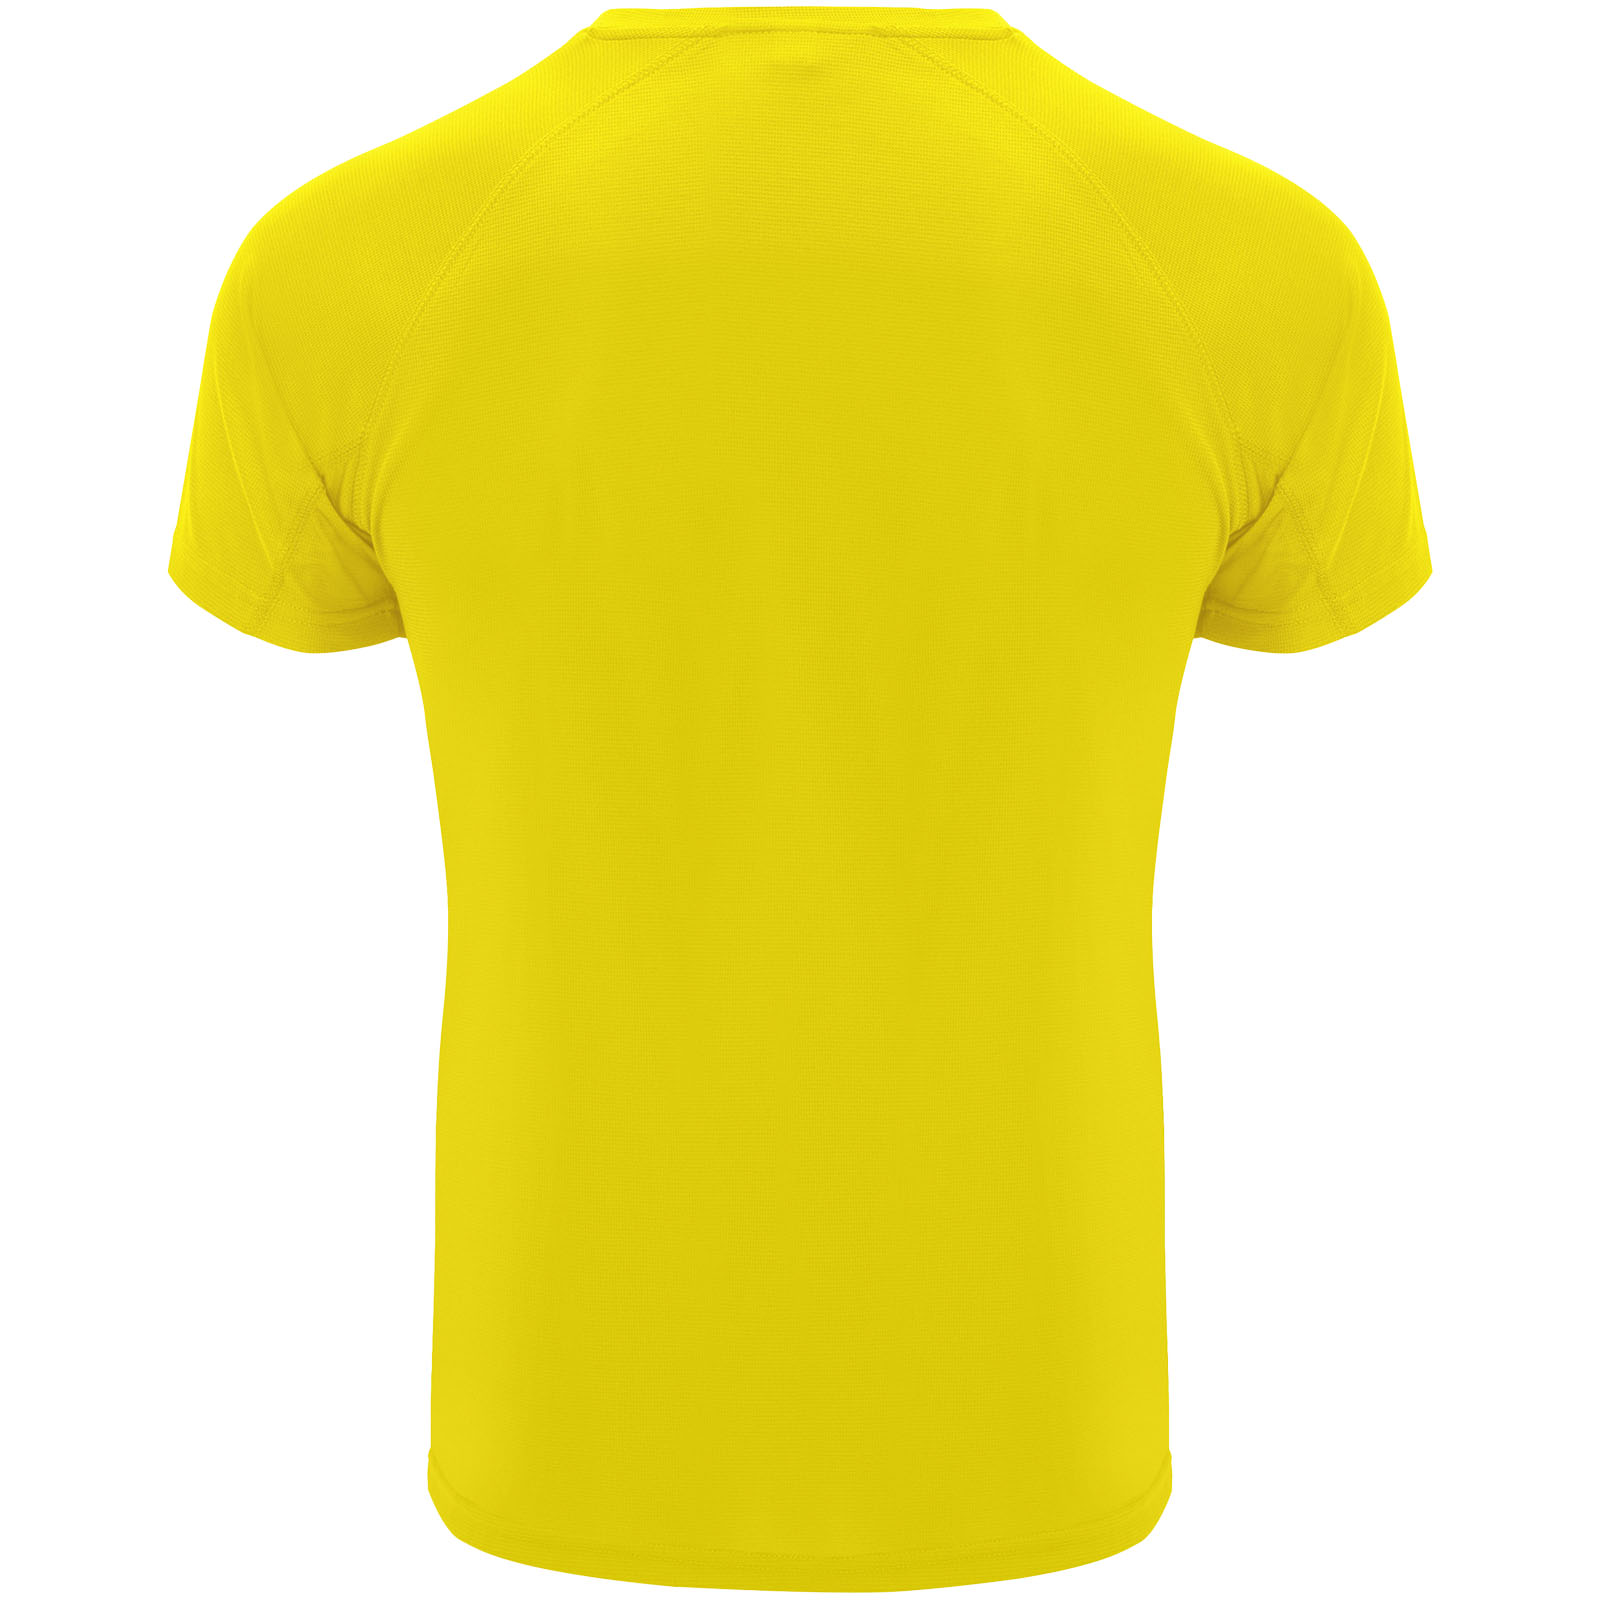 Advertising T-shirts - Bahrain short sleeve men's sports t-shirt - 1